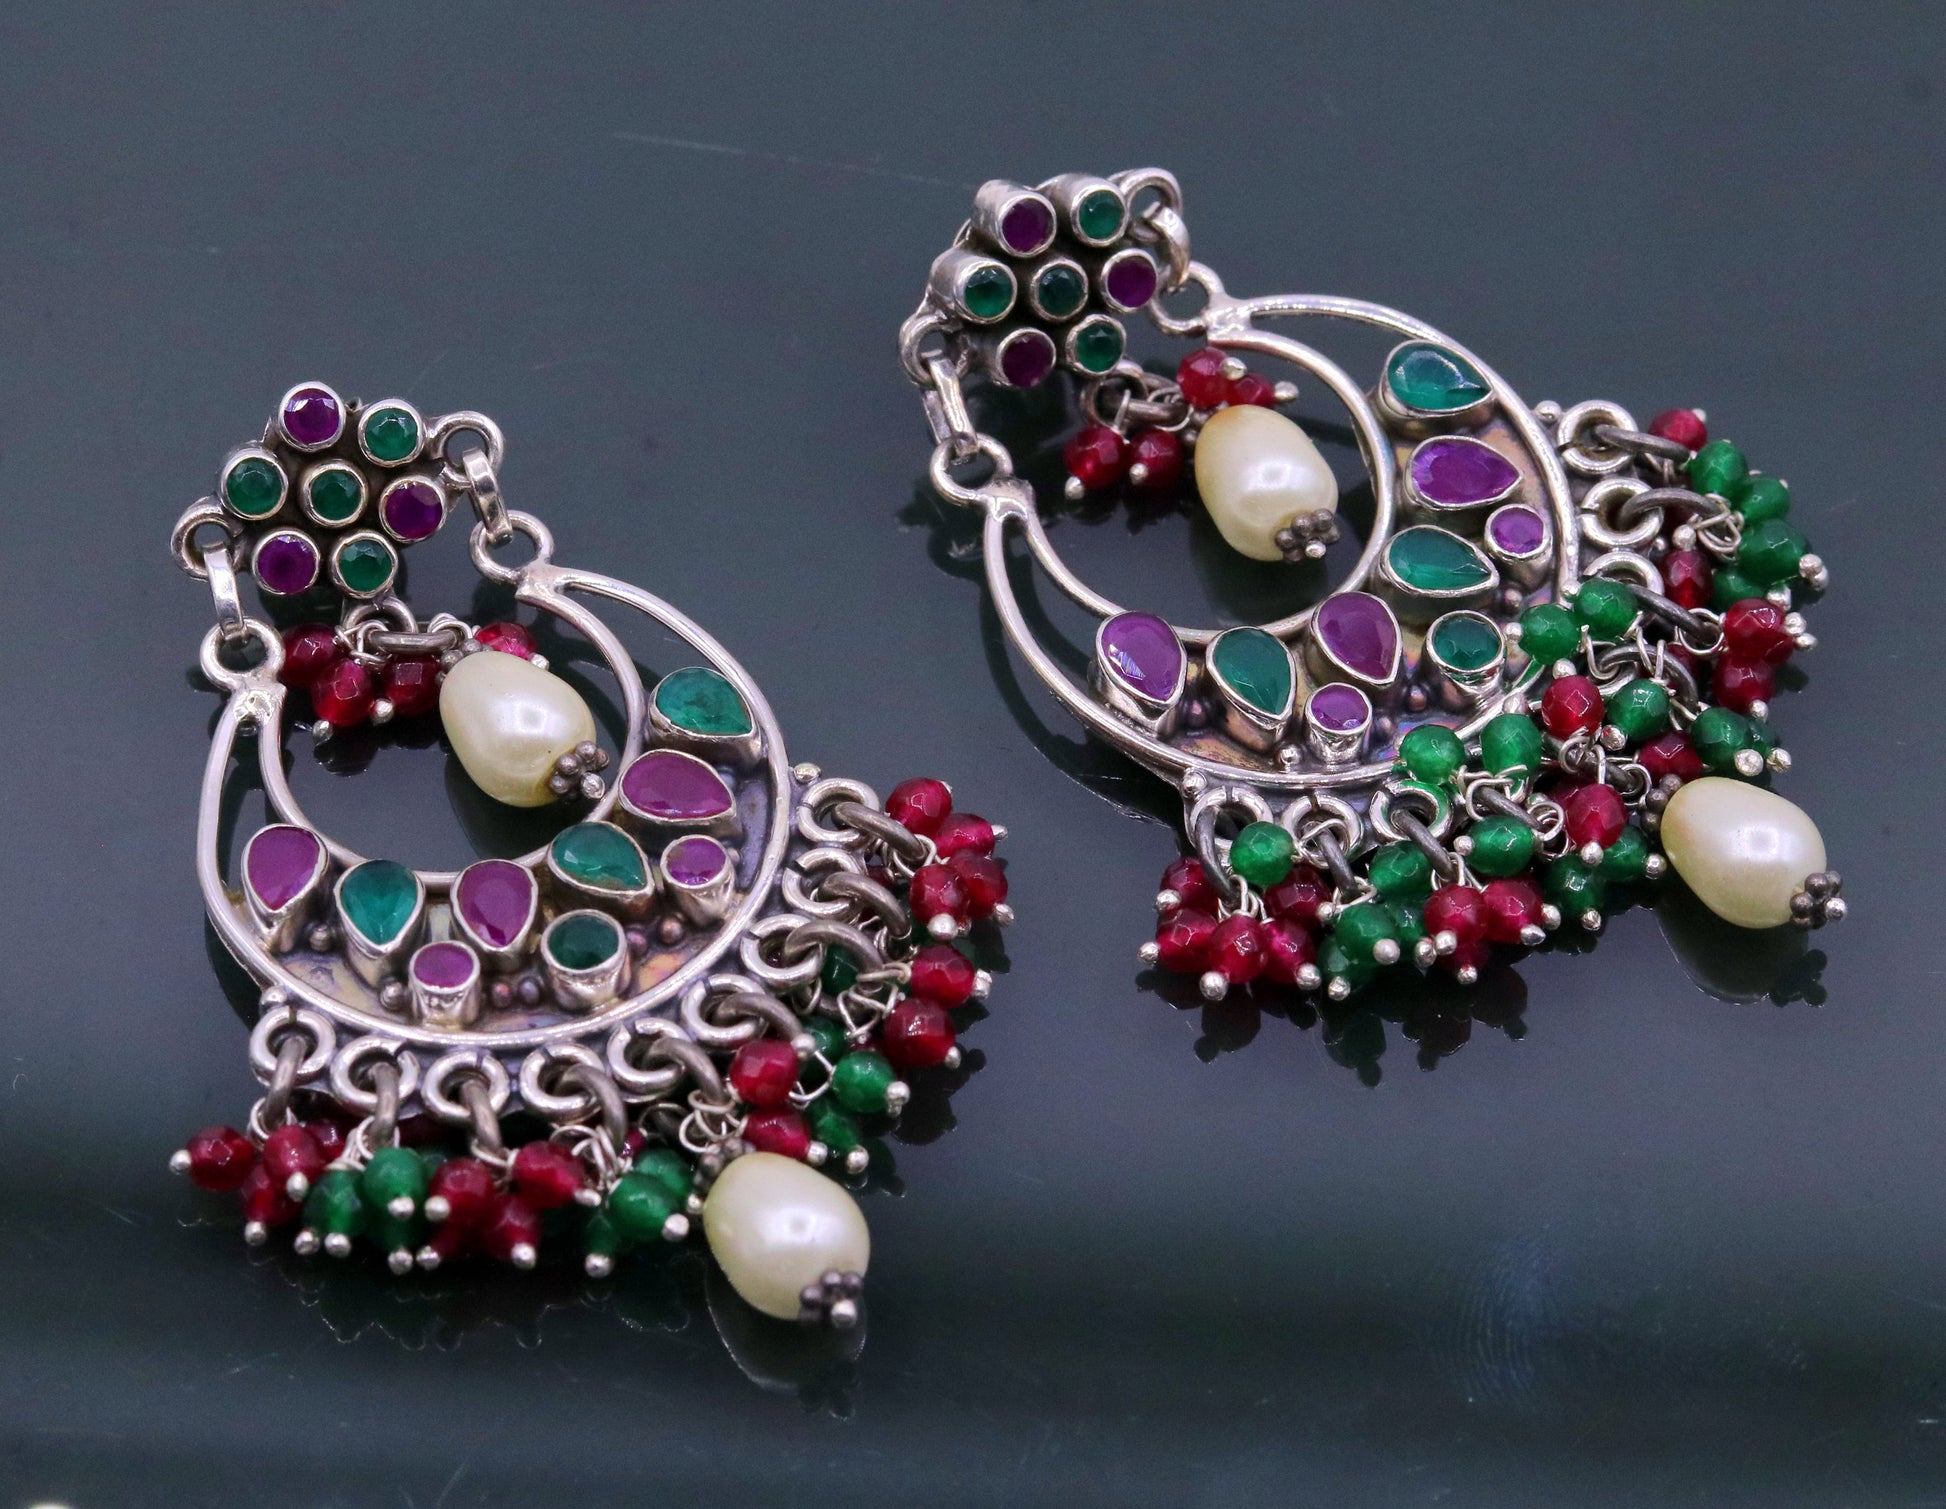 Vintage design 925 sterling silver handmade Gemstone stud earring drop dangling best design charm earrings hanging pearl tribal jewelry s715 - TRIBAL ORNAMENTS